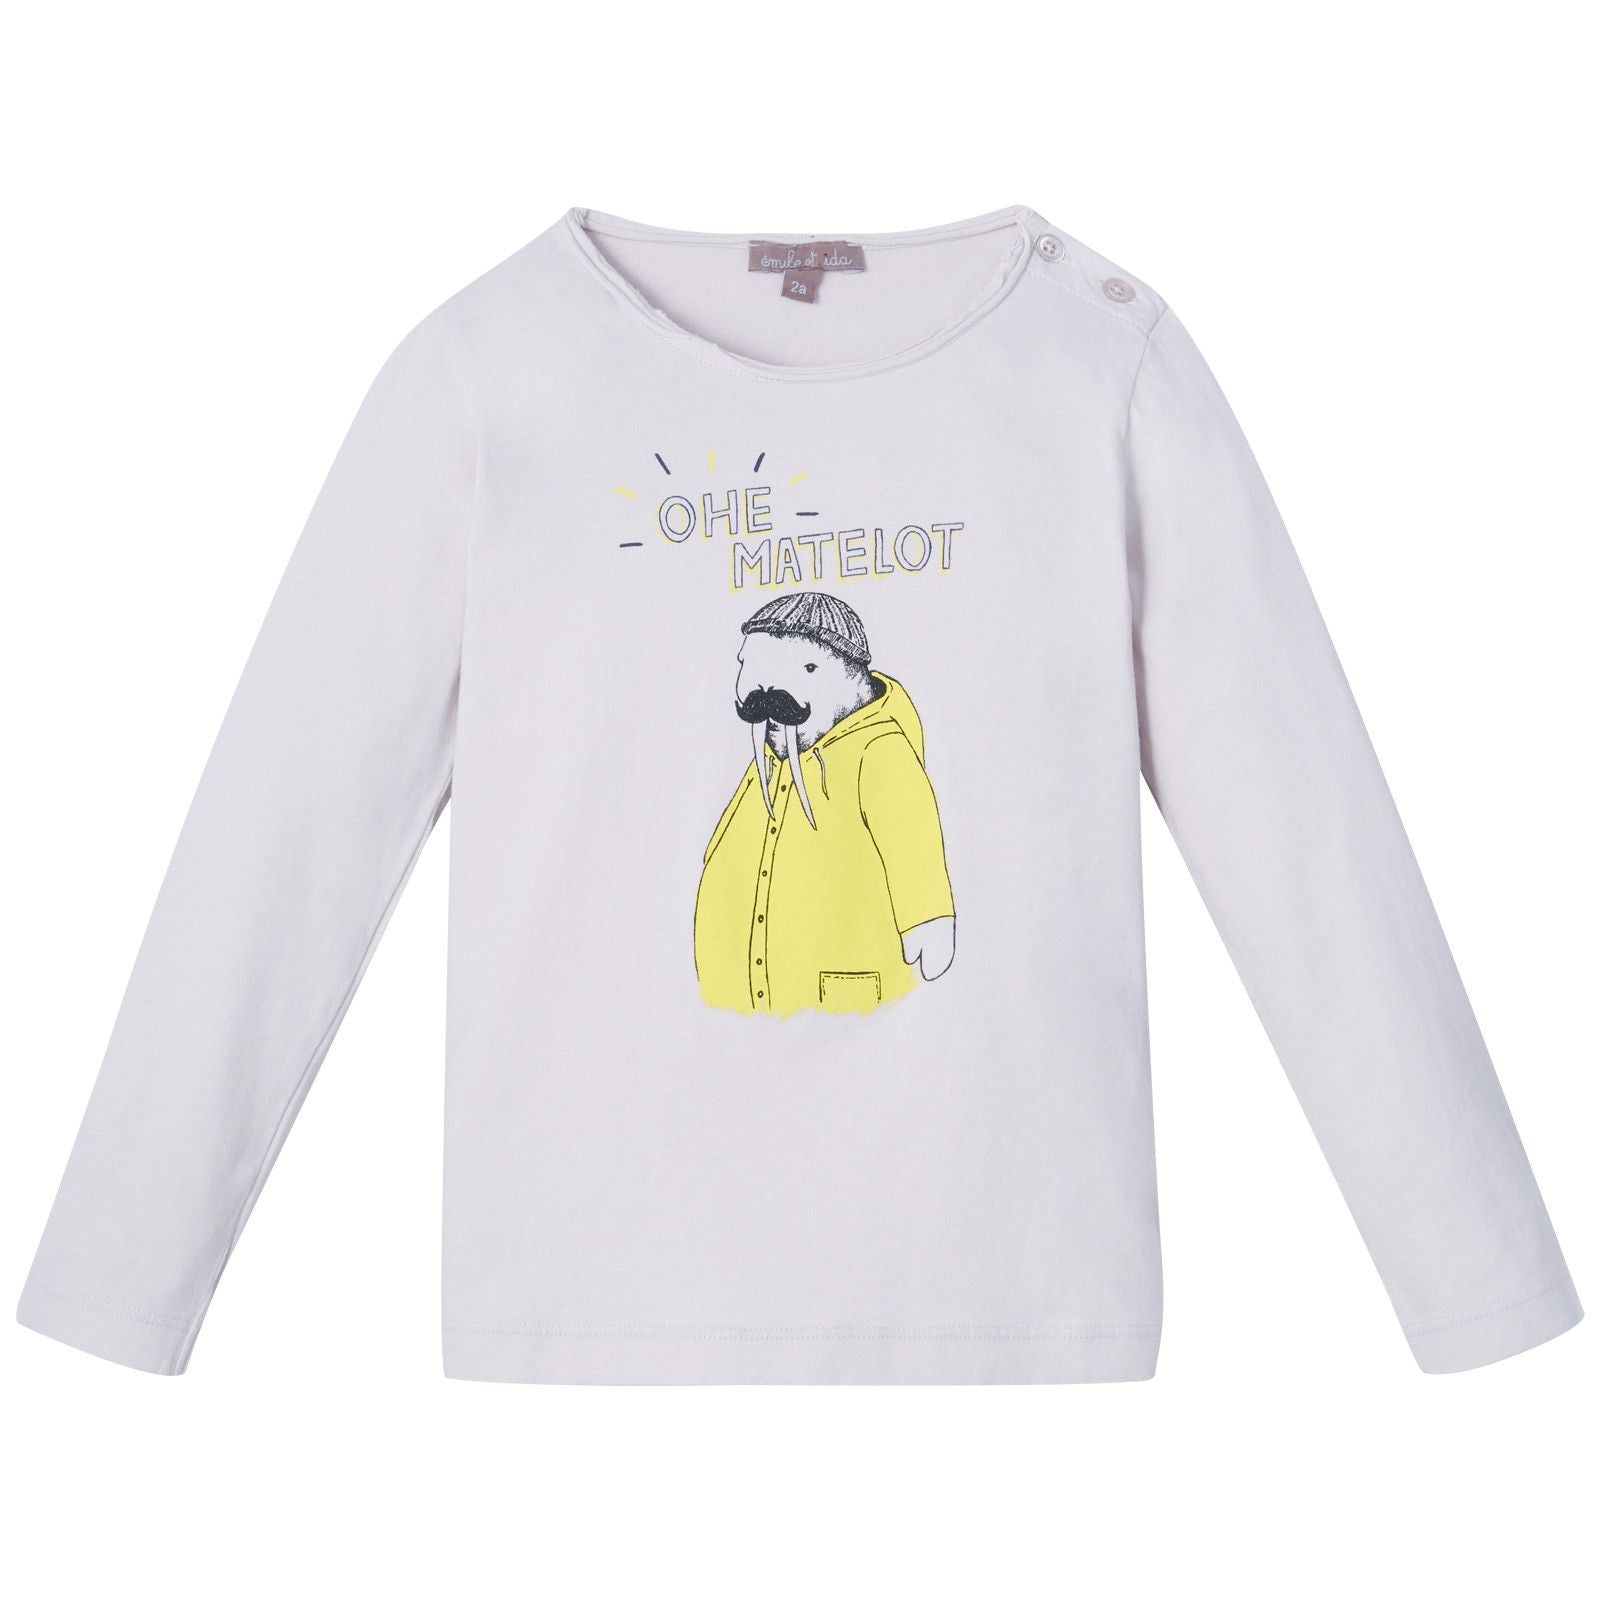 Boys Light Grey Fantasy Printed Cotton T-Shirt - CÉMAROSE | Children's Fashion Store - 1